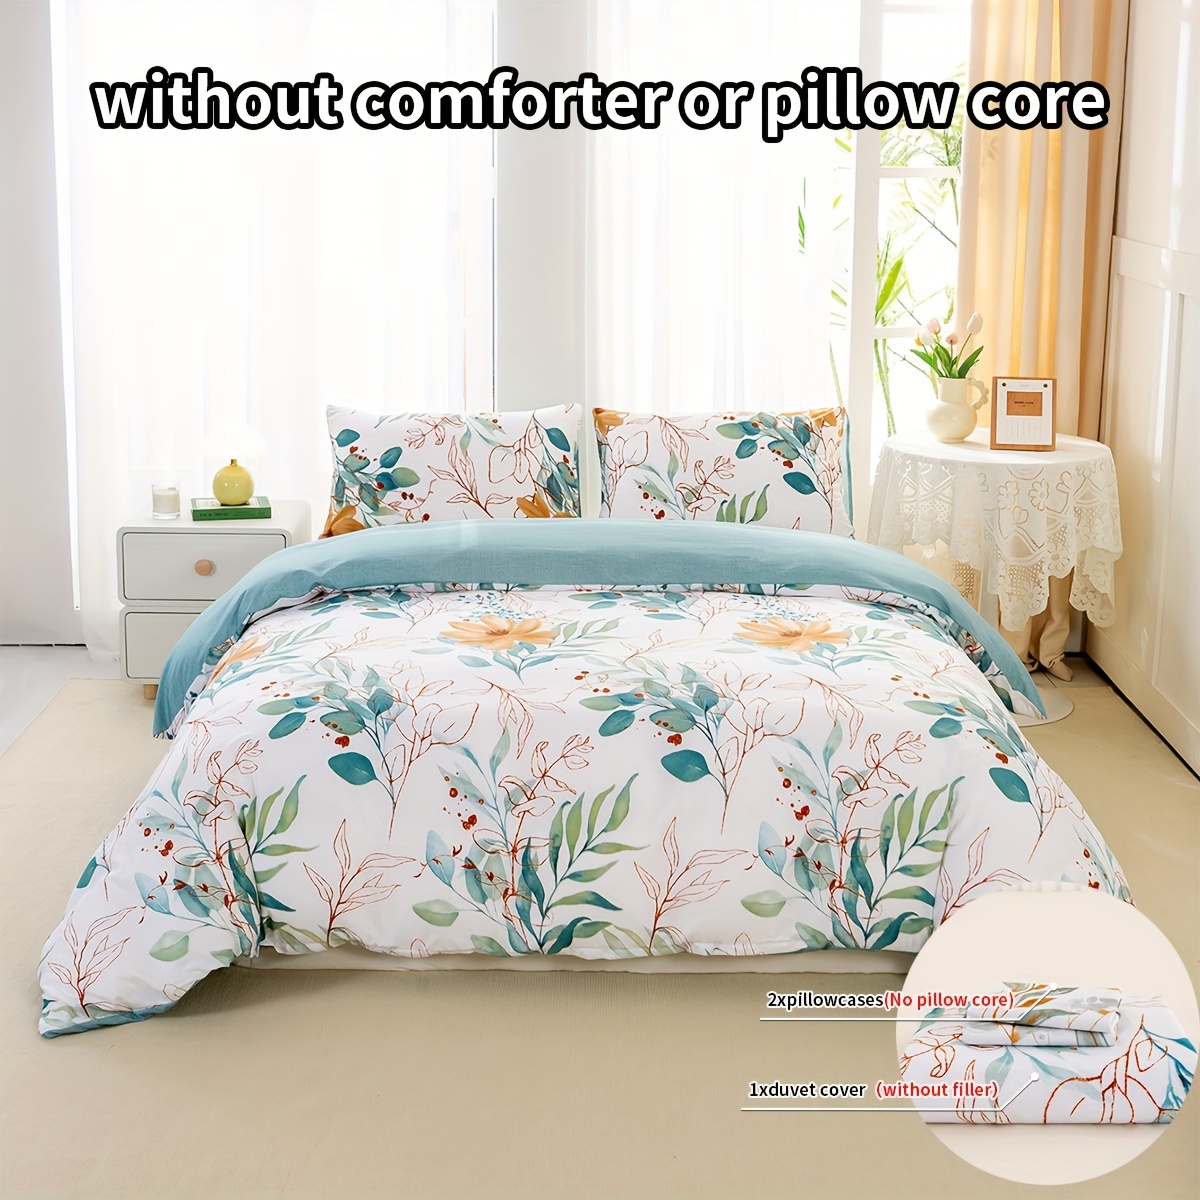 

3pcs Floral Print Duvet Cover Set, Soft Microfiber Bedding With 1 Duvet Cover And 2 Pillowcases - No Comforter Or Pillow Core, Elegant Bedroom Decor